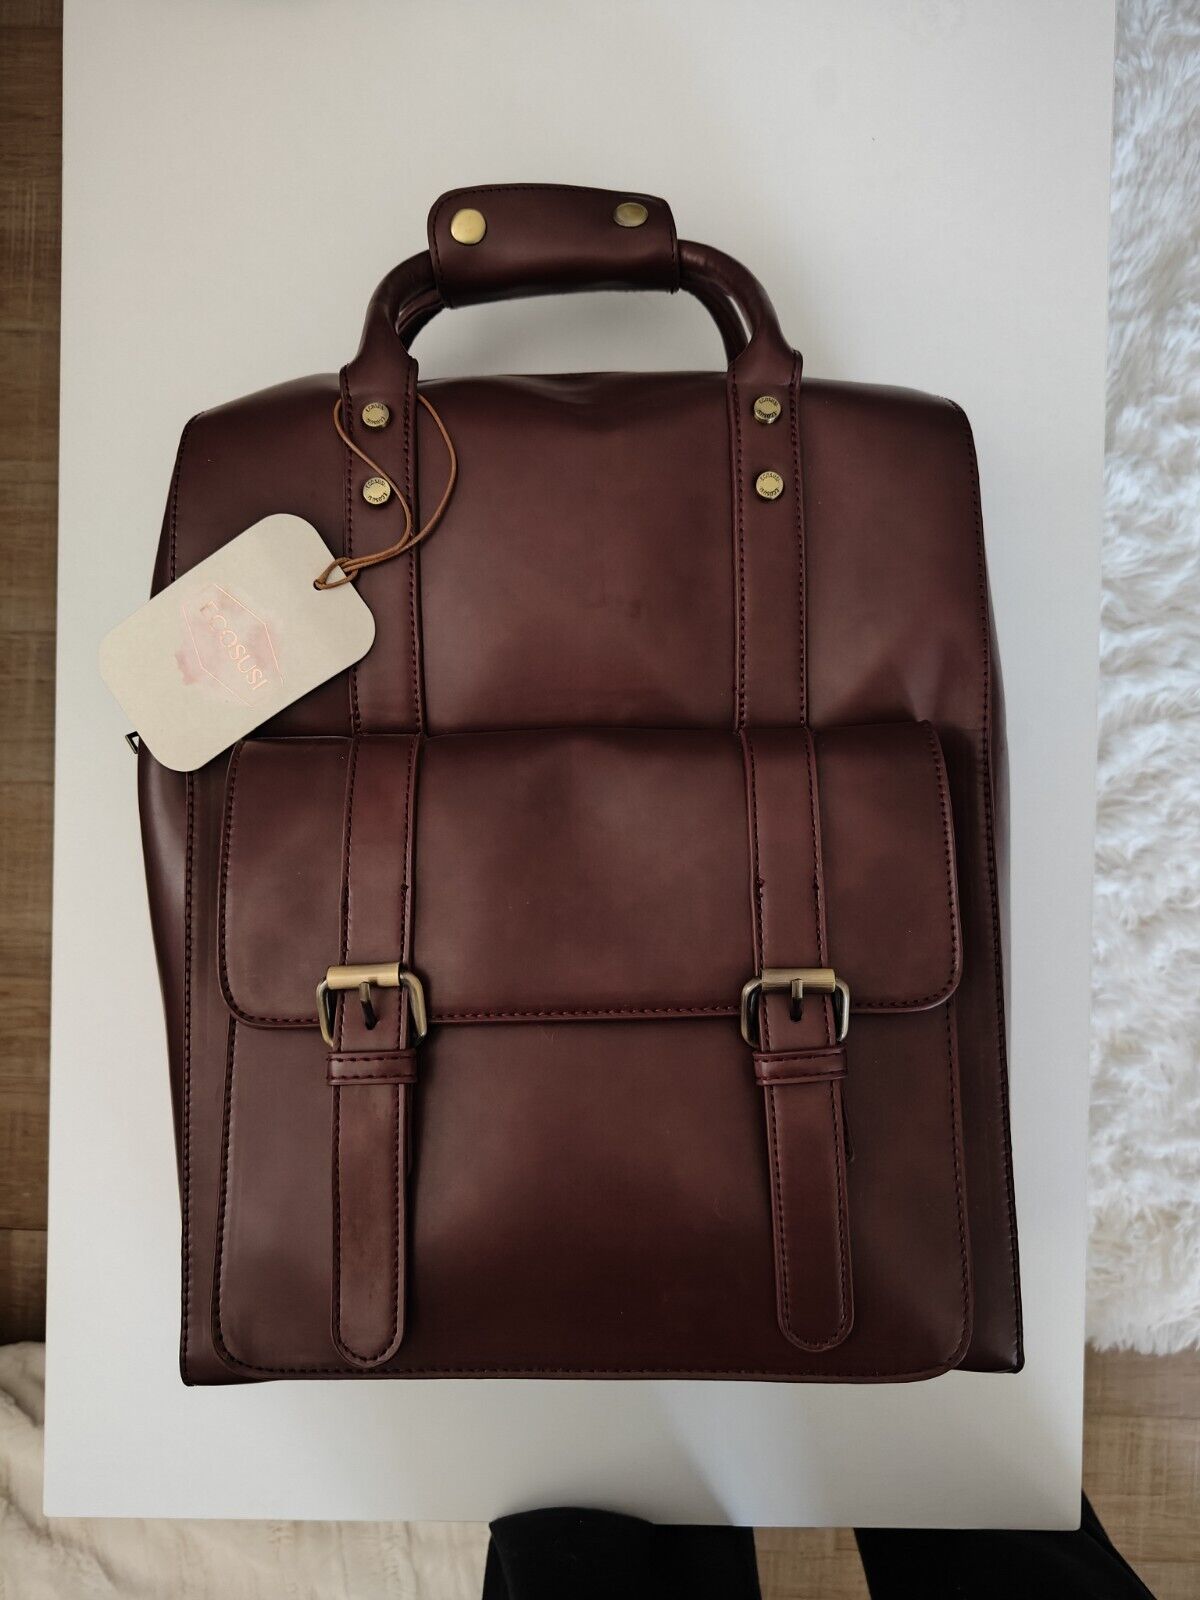 ECOSUSI Laptop 15.6 inches Backpack PU Leather Bag, Burgundy